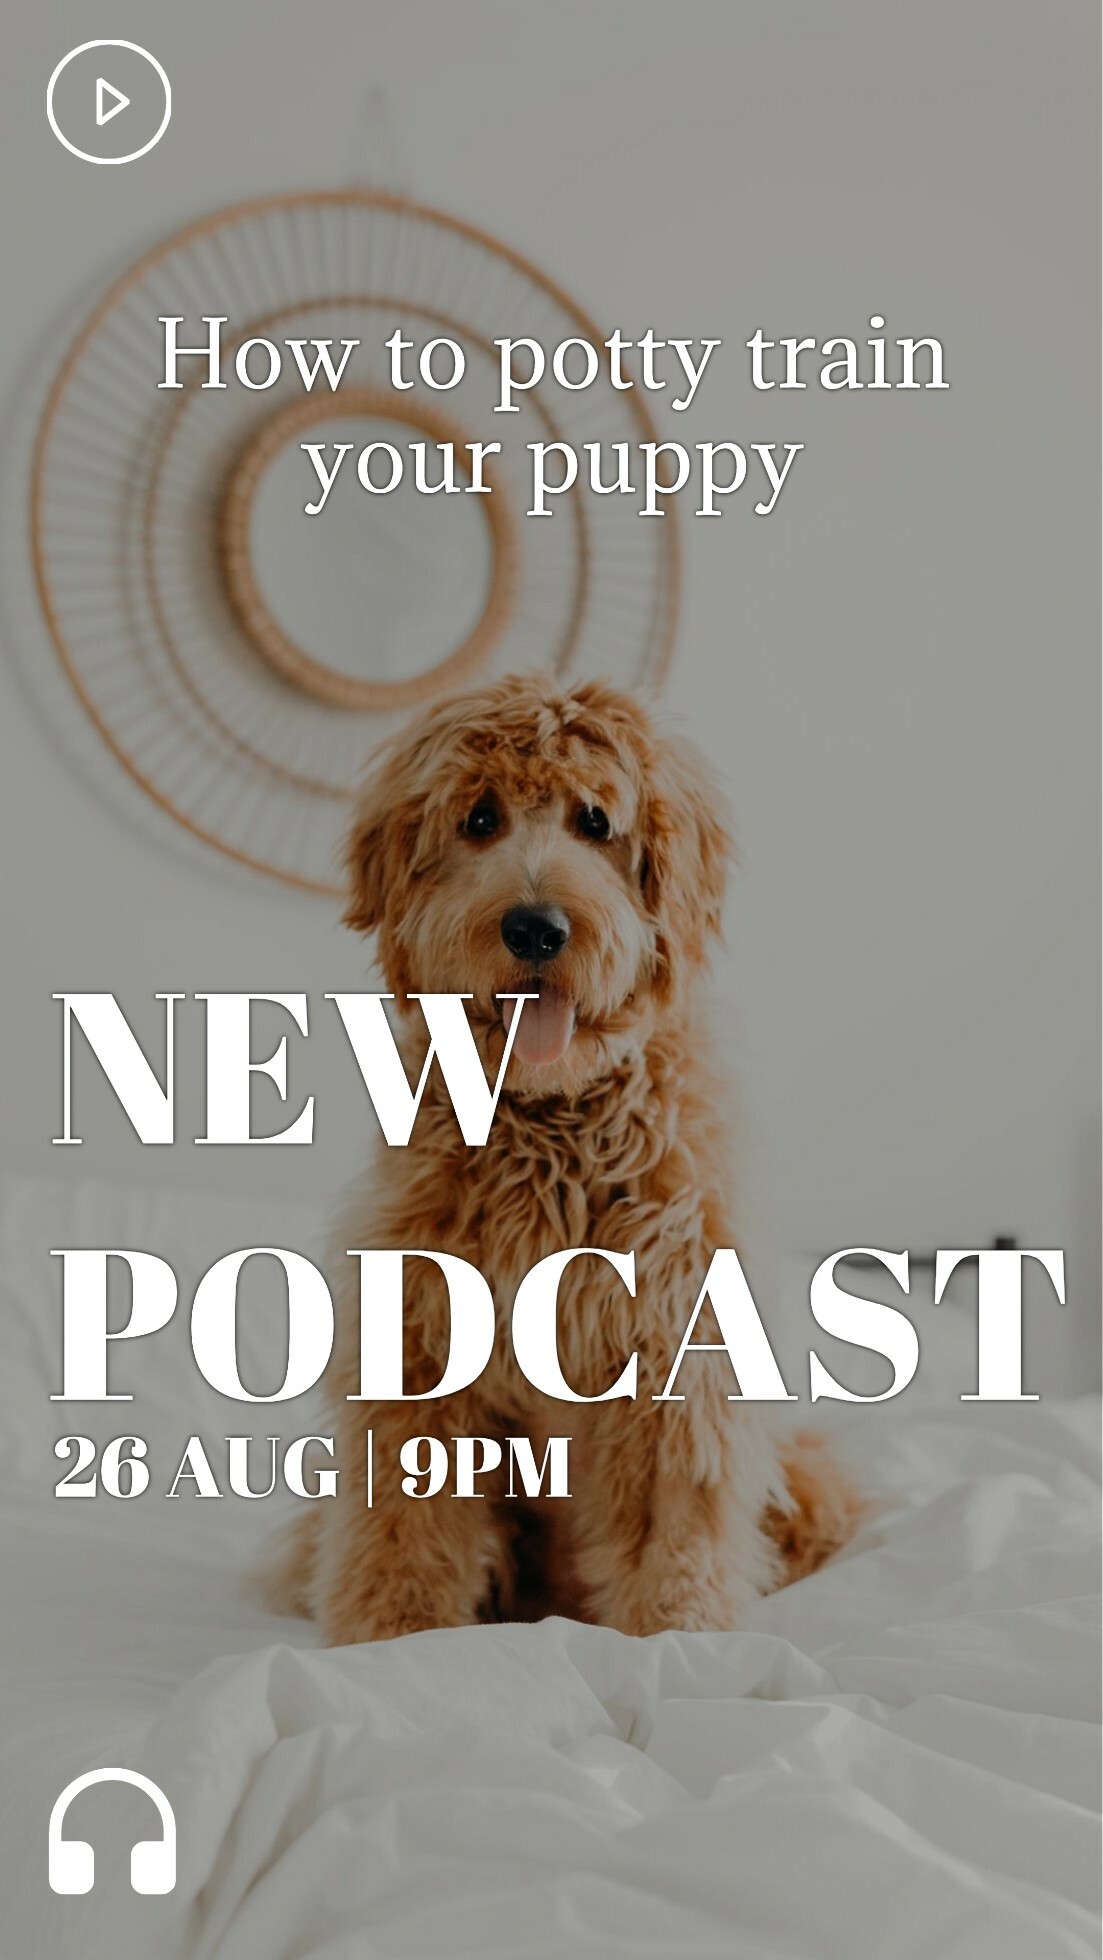 Dog Podcast Promo template